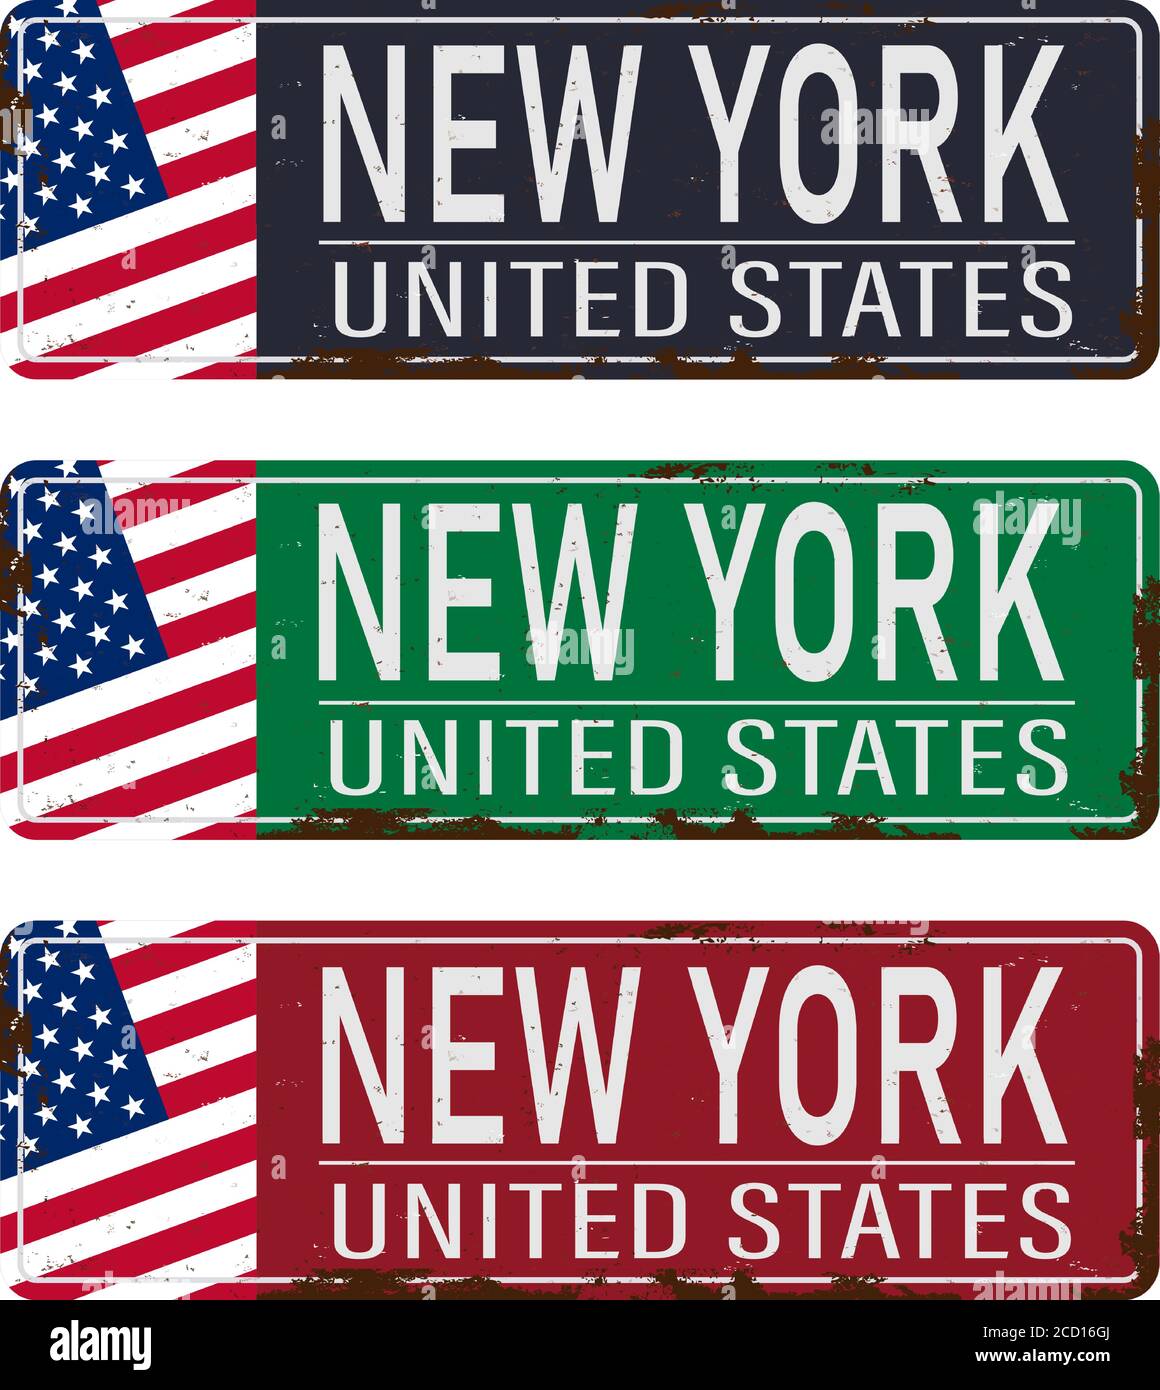 New York Amerika Retro Metall Souvenir Druck Design Layout. Willkommen bei New York vintage Blechschild Vorlage. Americana Vektorgrafik. Stock Vektor